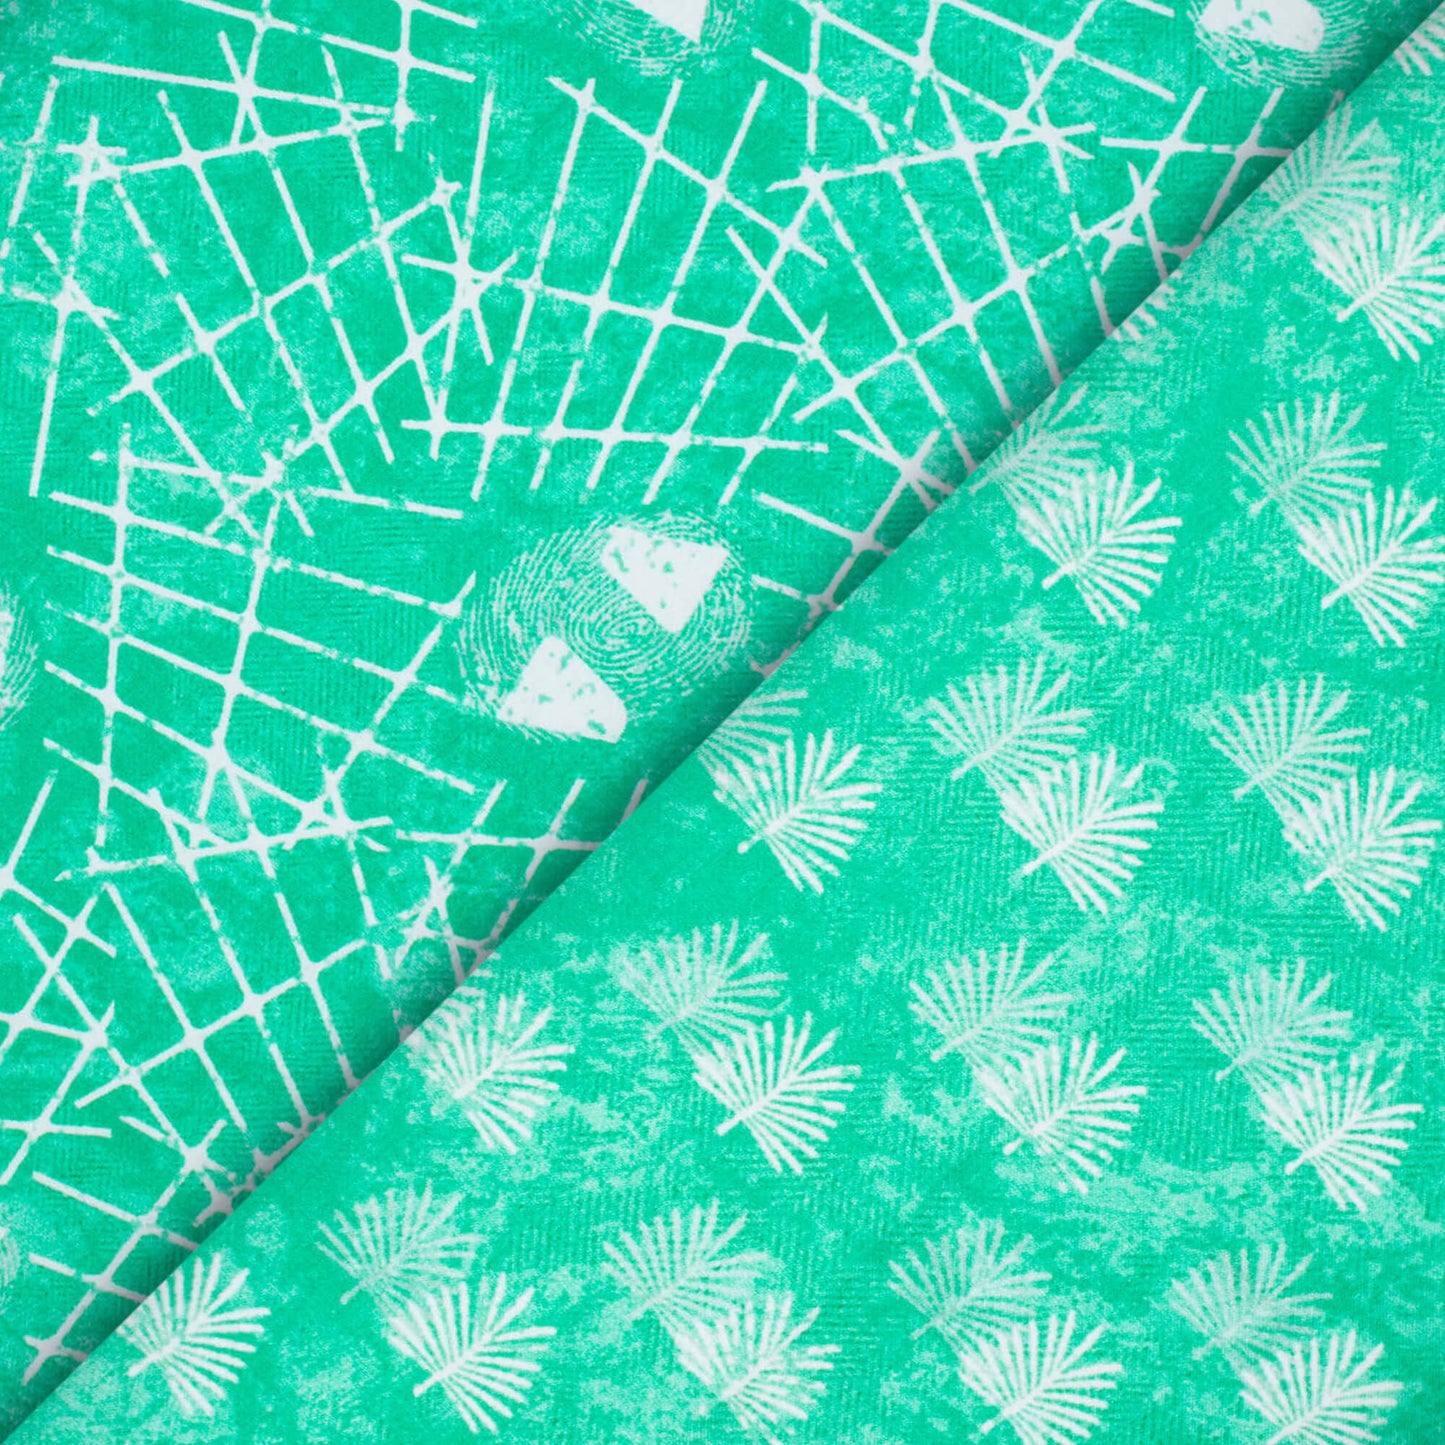 Jungle Green And White Leaf Pattern Digital Print Crepe Silk Fabric